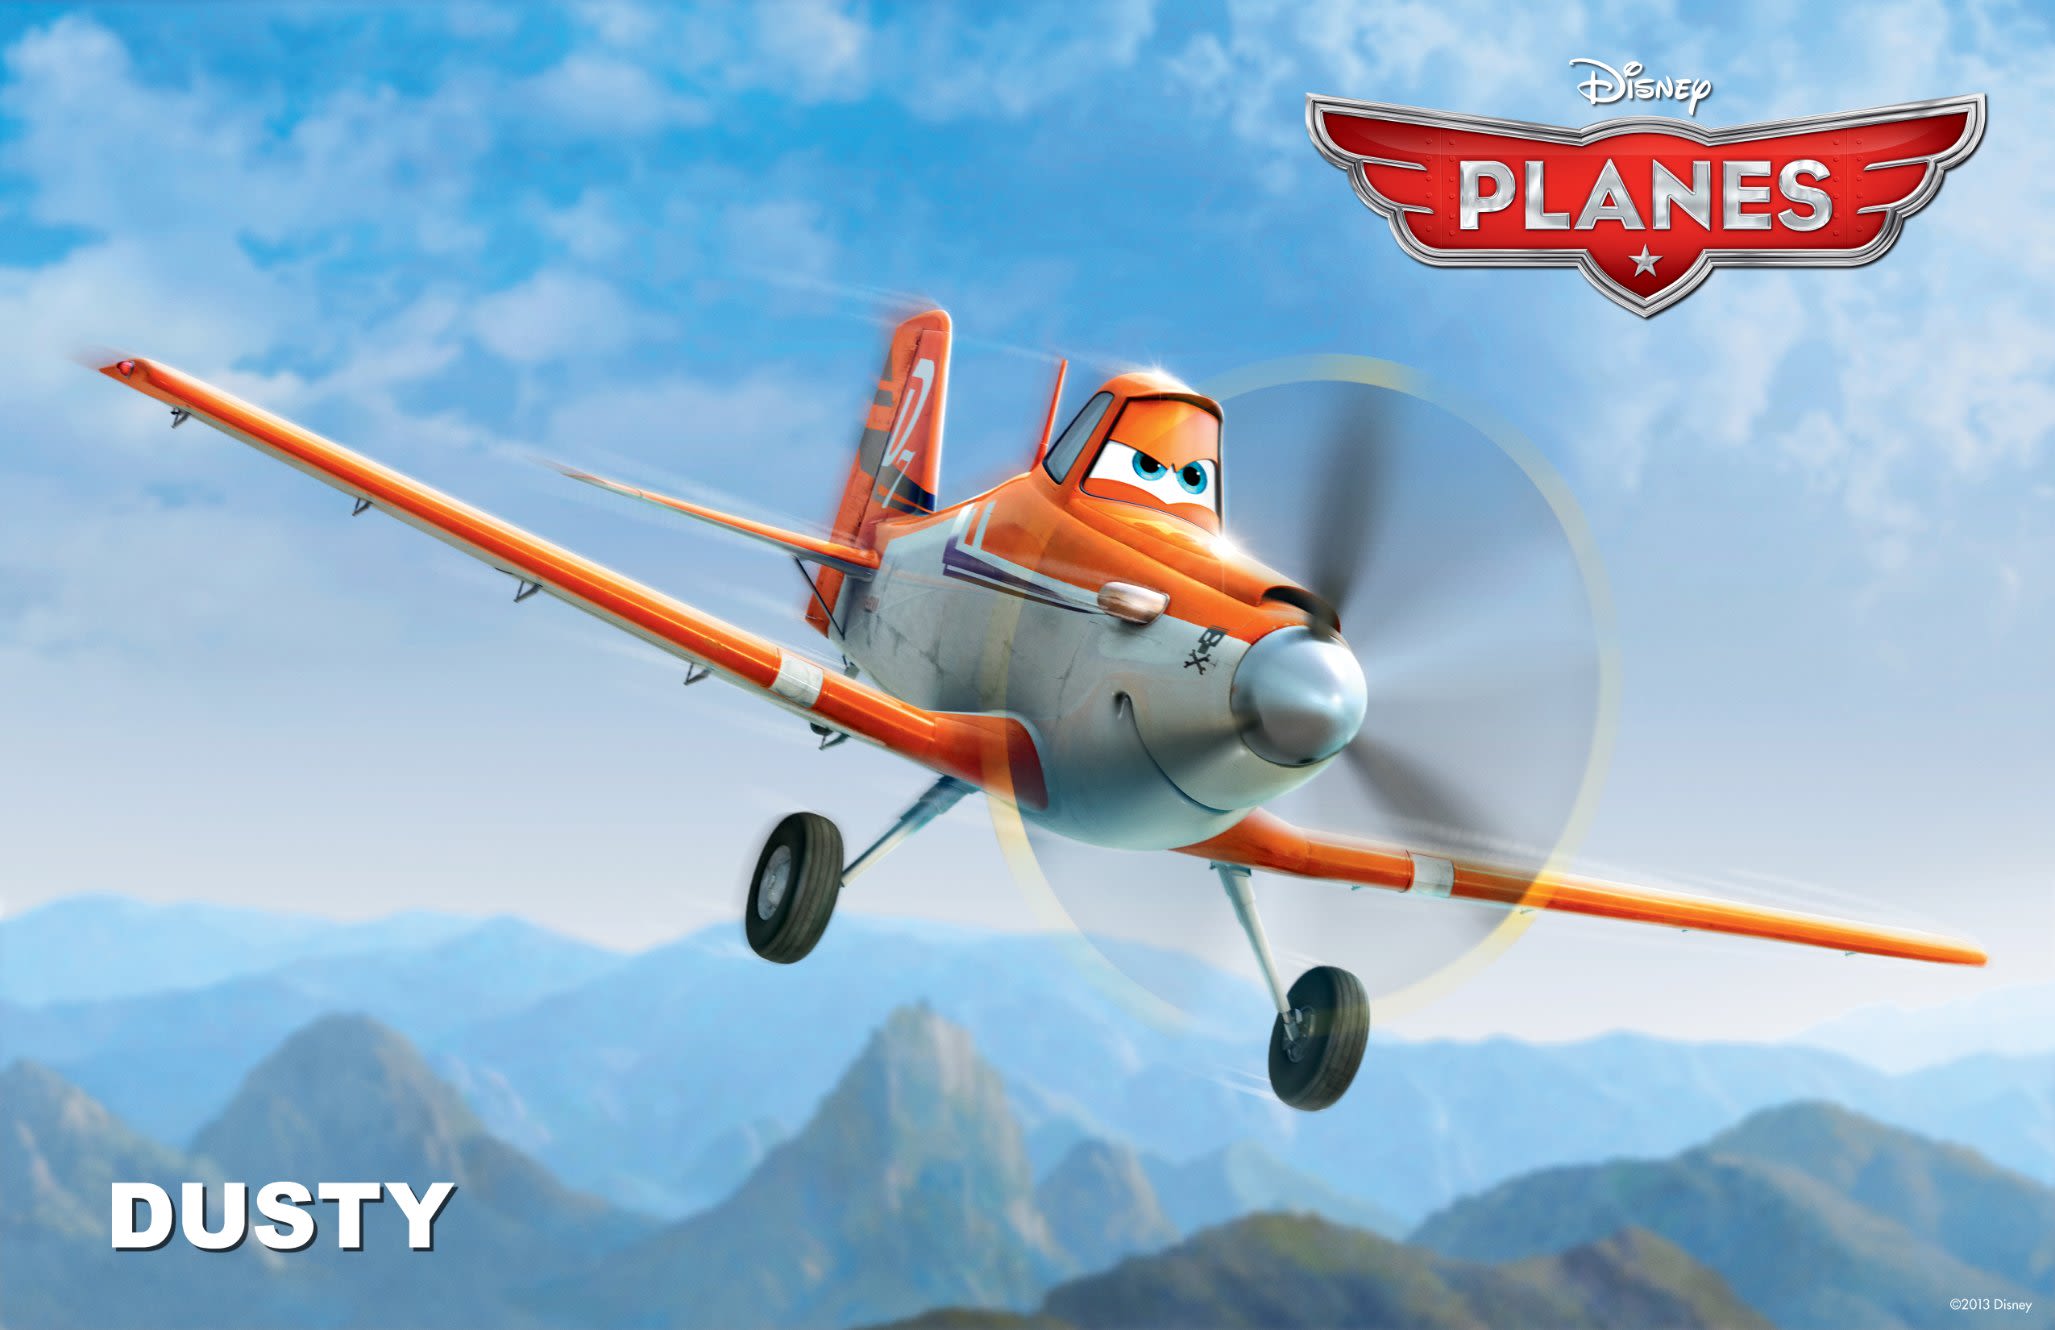 Meet the \'Planes\' CNN Disney\'s flying pilot right who | kept film